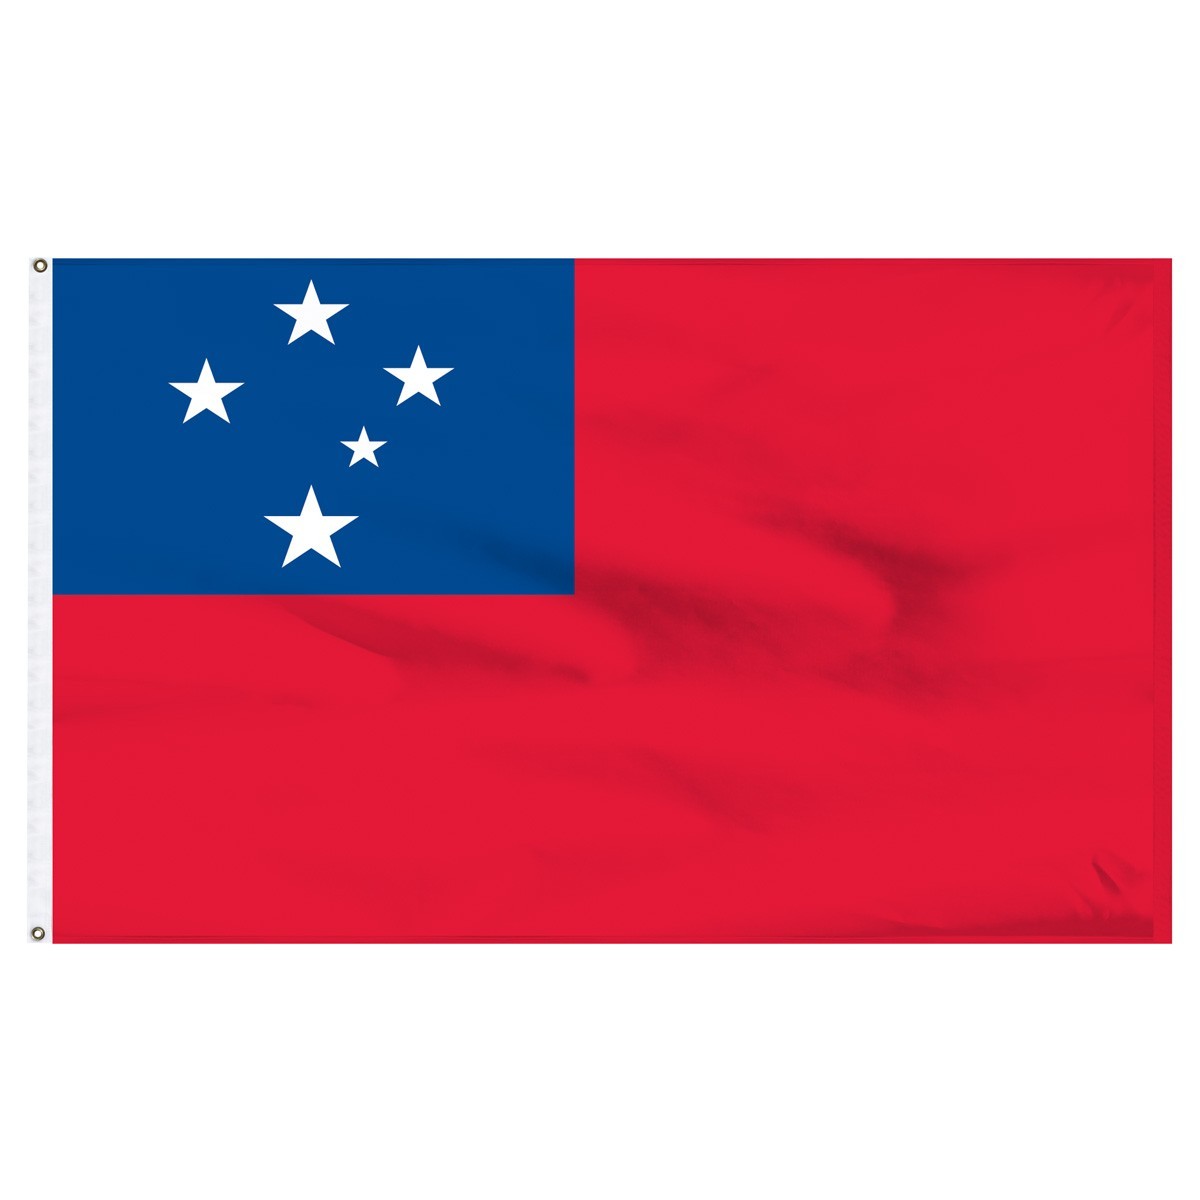 Bandera de nailon para exteriores de Samoa Occidental de 4 pies x 6 pies